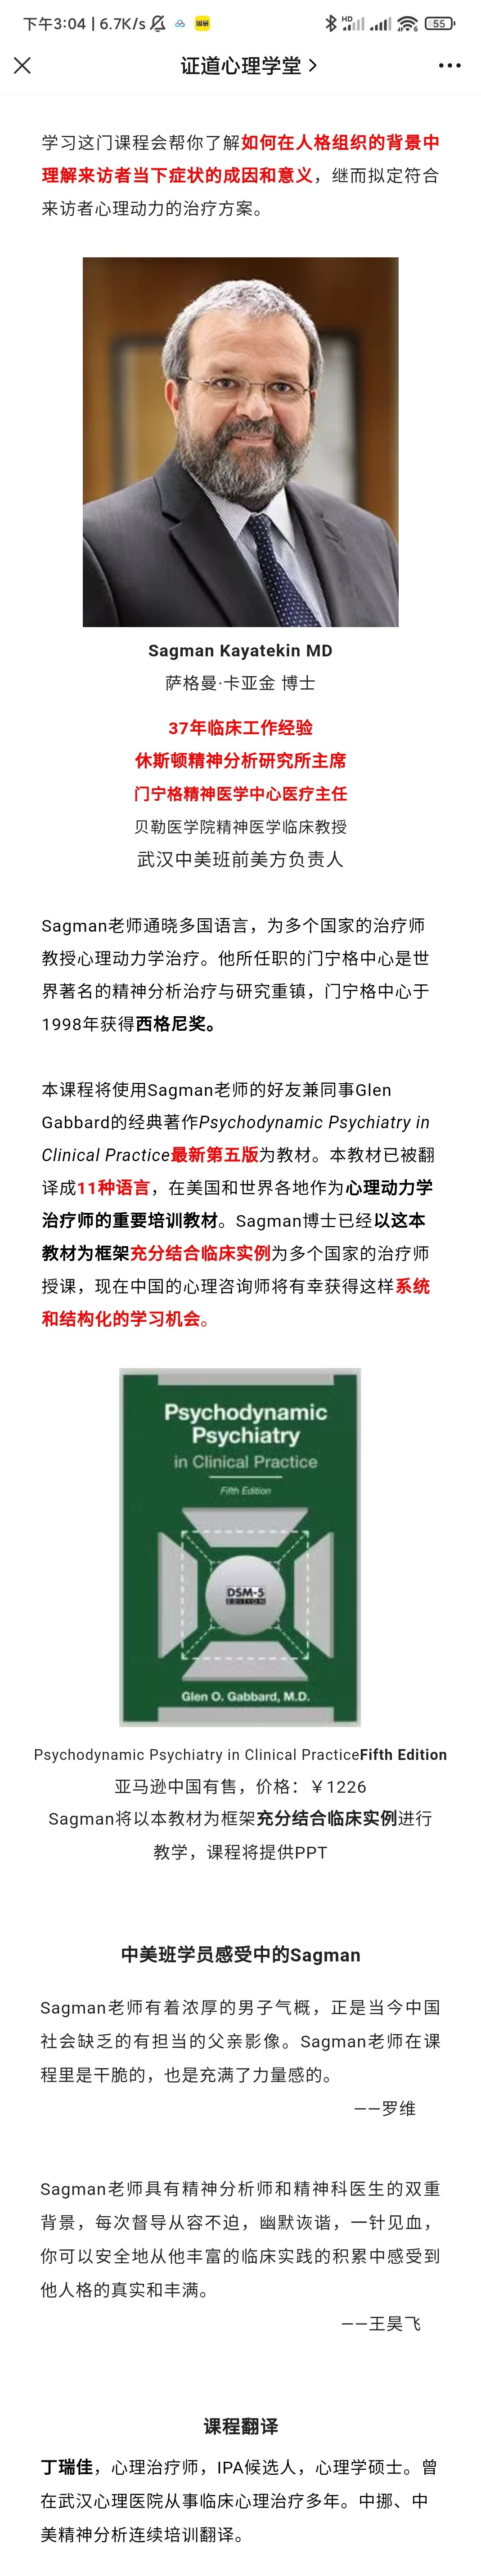 Sagman主讲10类人格和8种症状的心理动力学诊断与治疗 视频+音频+文字稿+课件-1